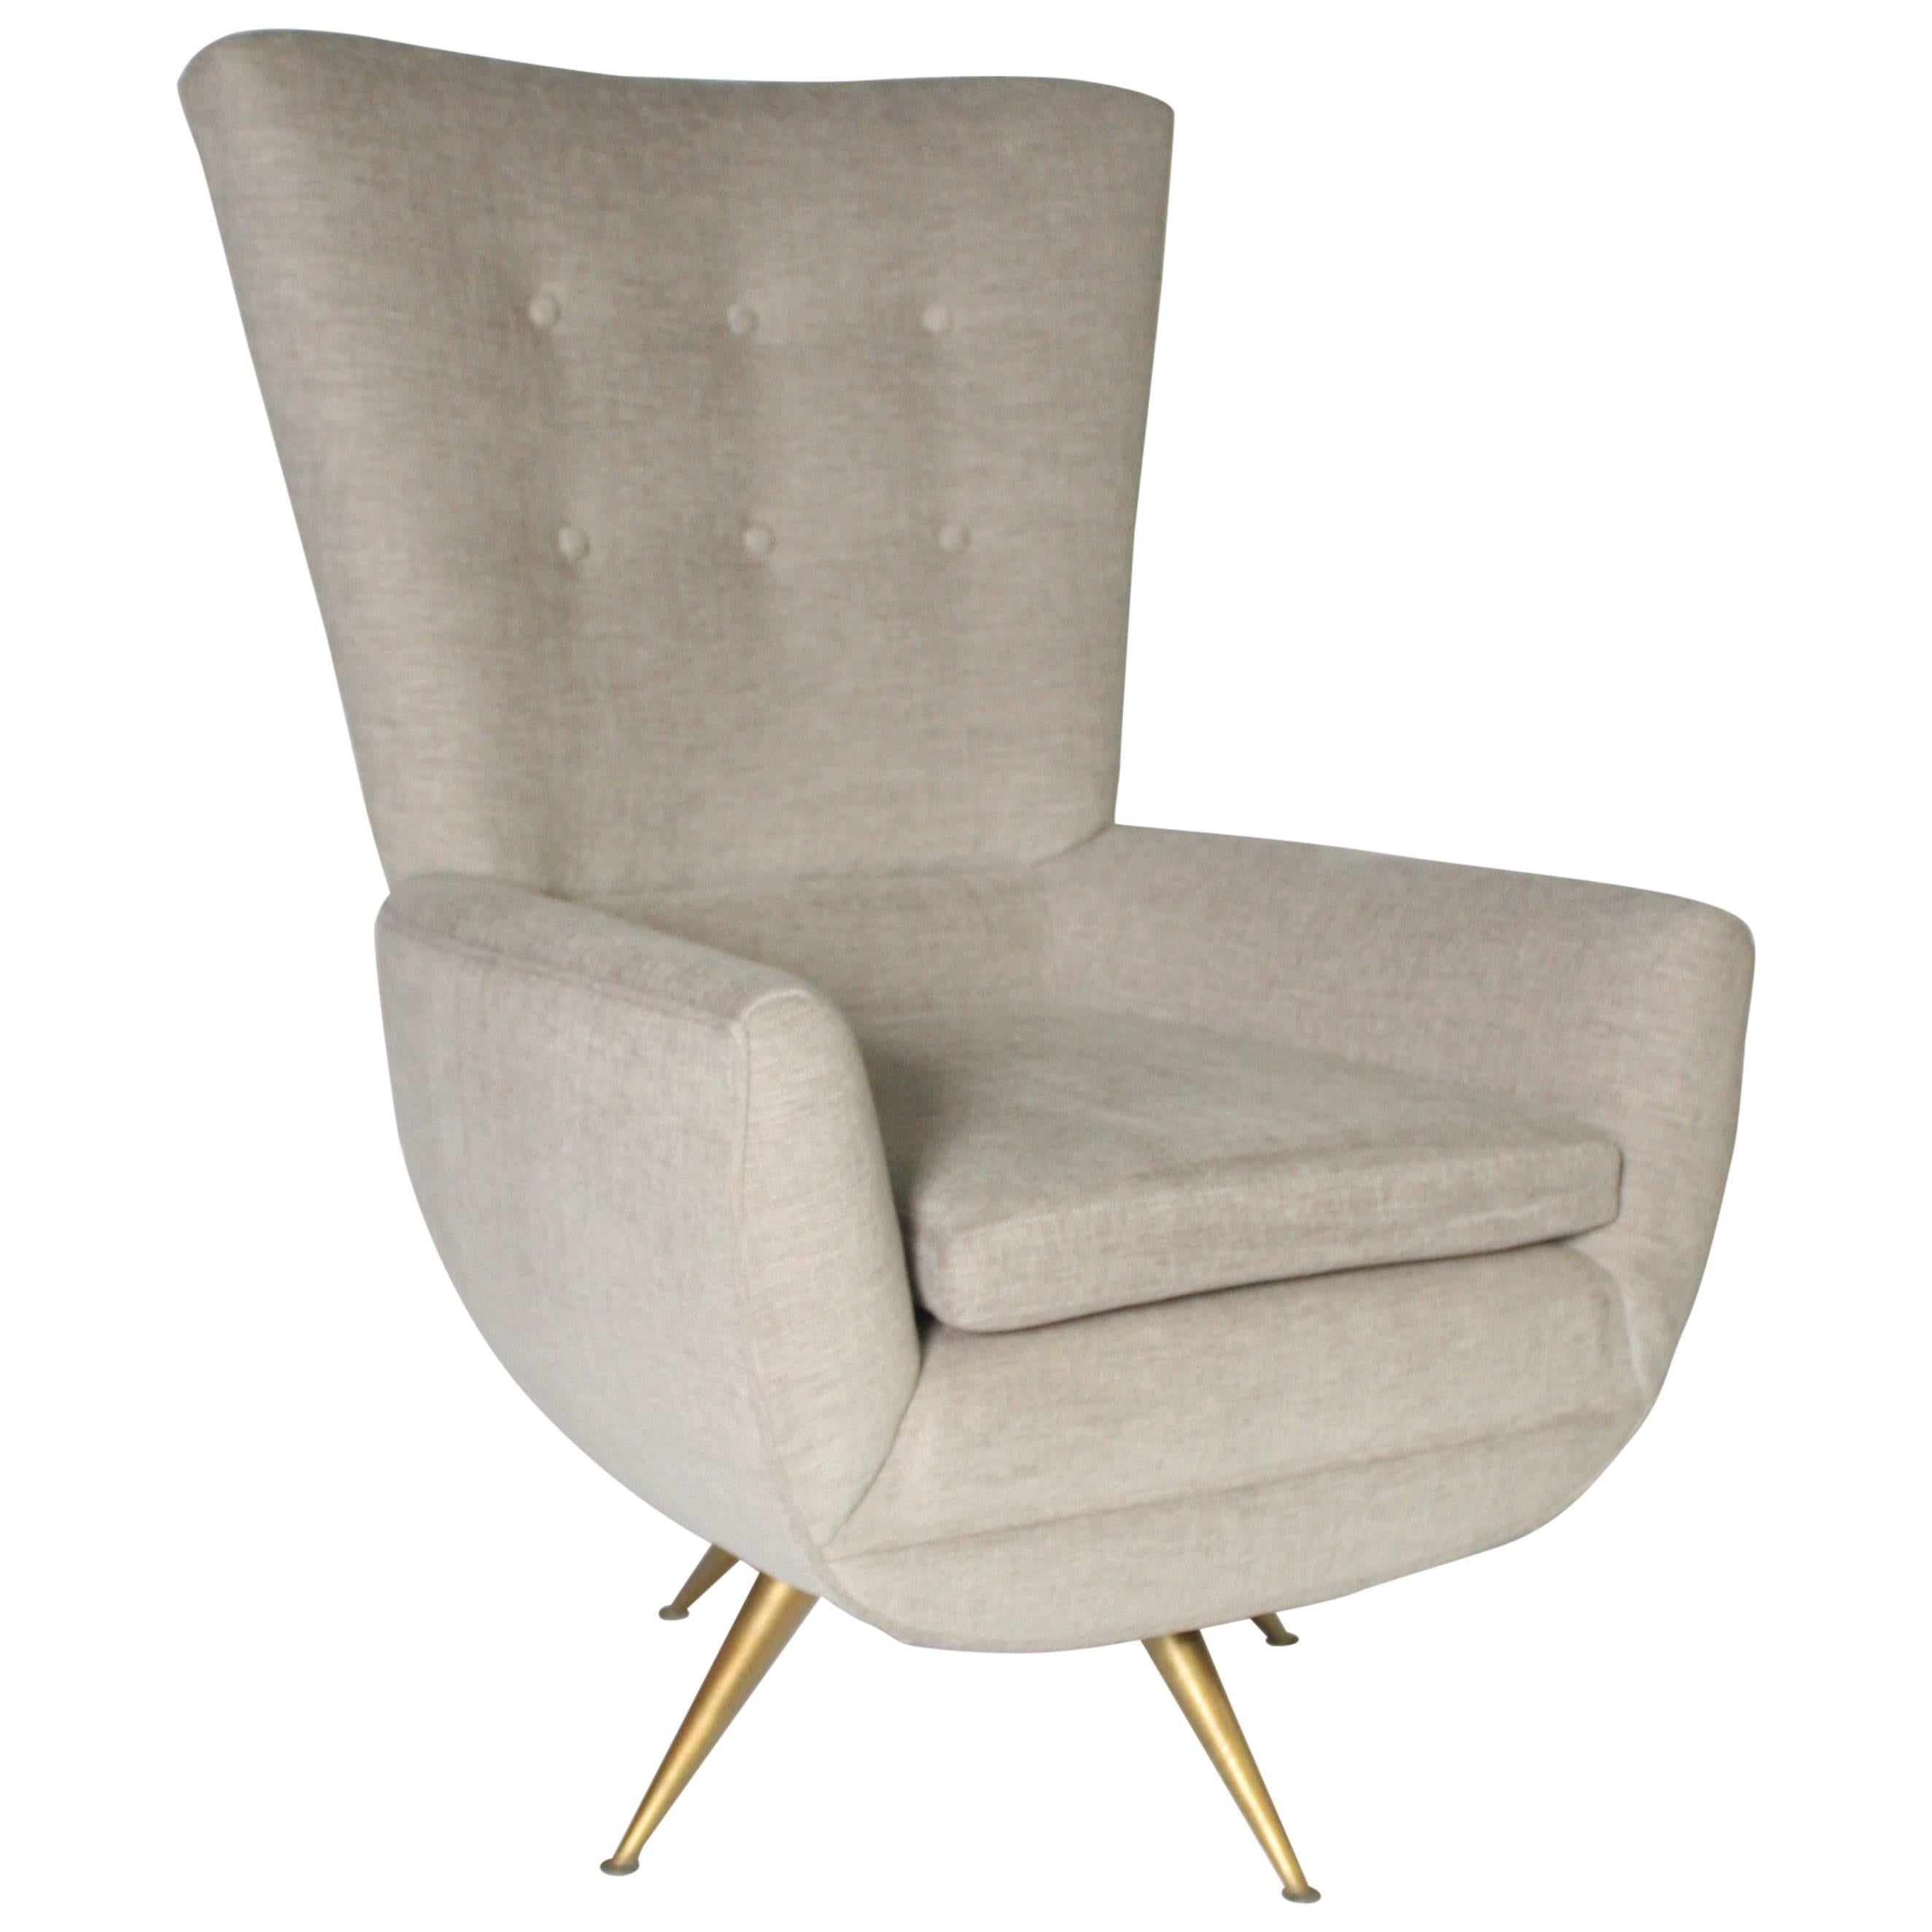 Henry Glass Swivel Lounge Chair